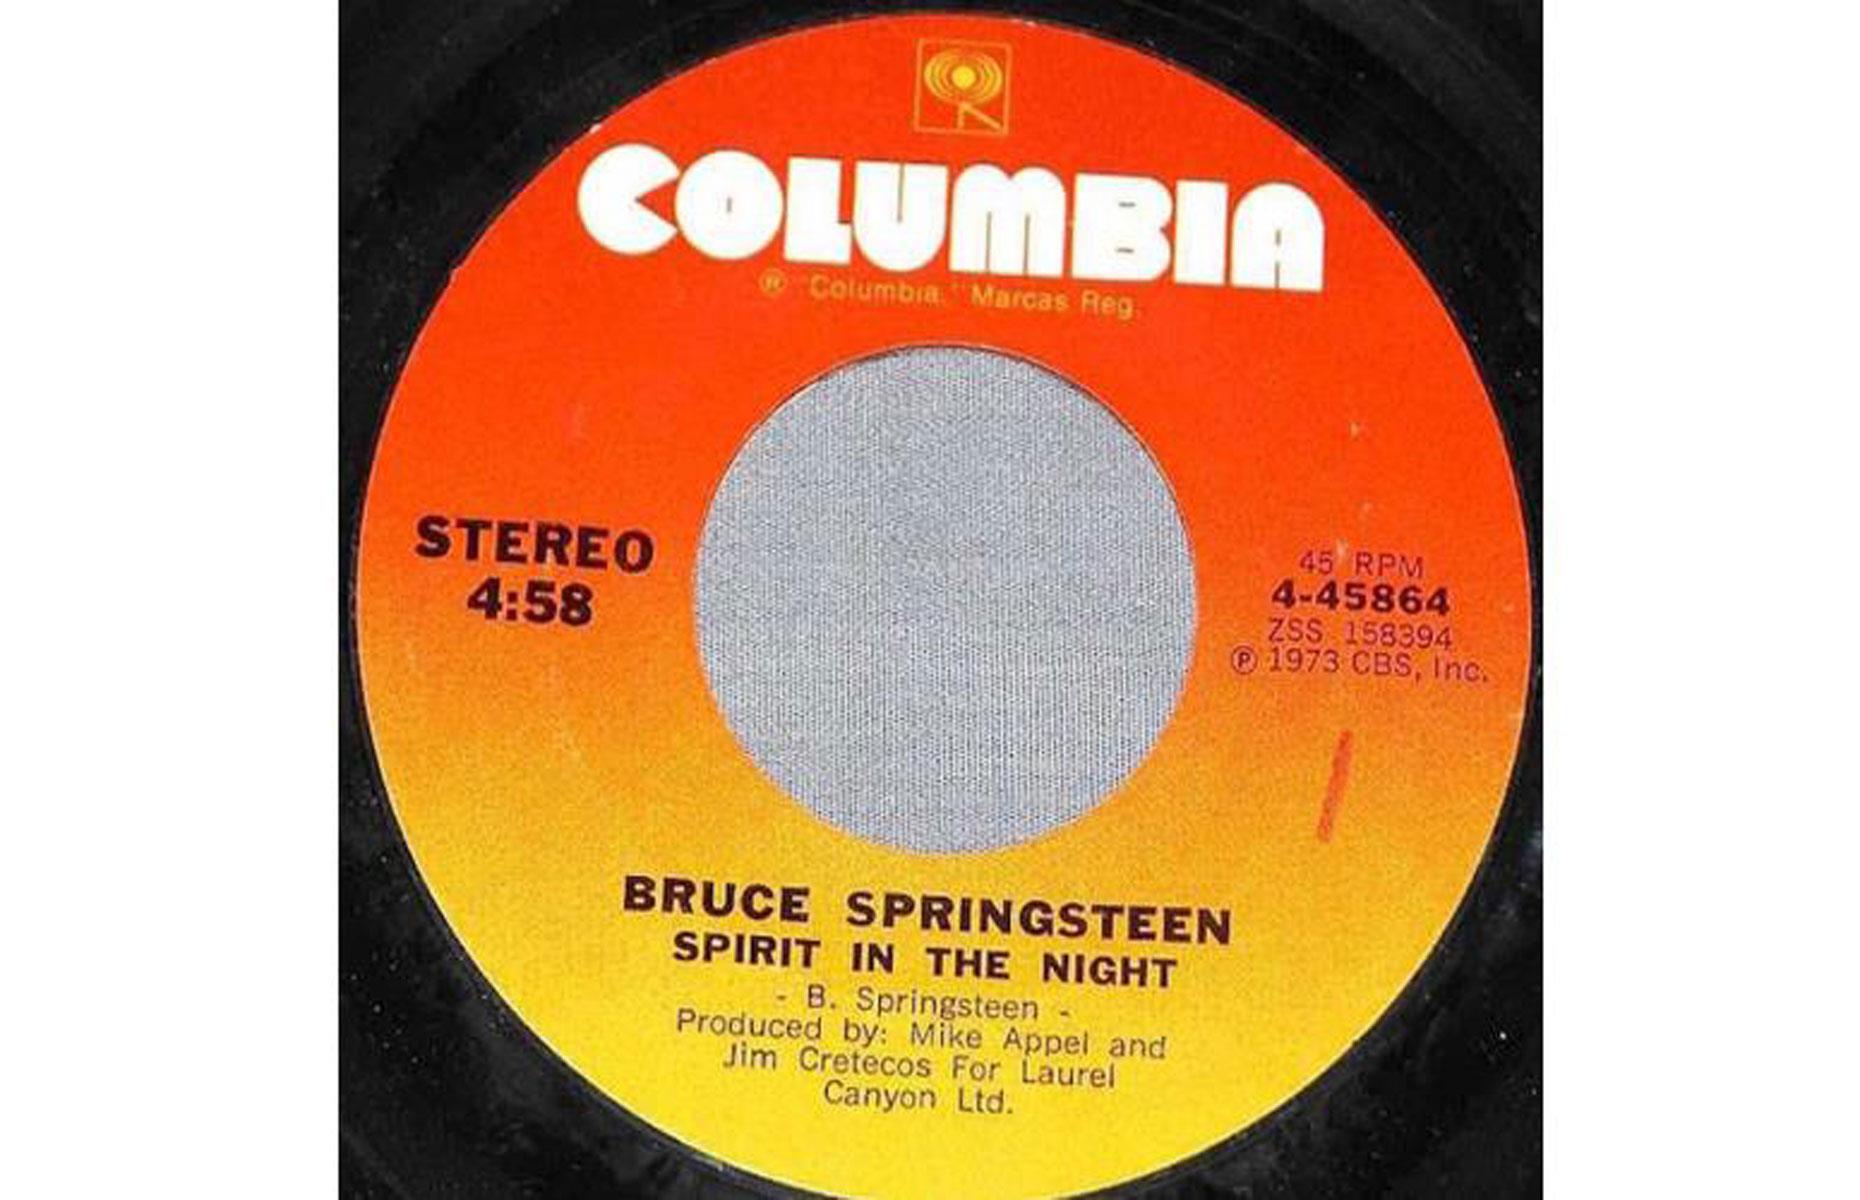 Bruce Springsteen's Spirit In The Night 7” vinyl single: $5,000 (£4k)